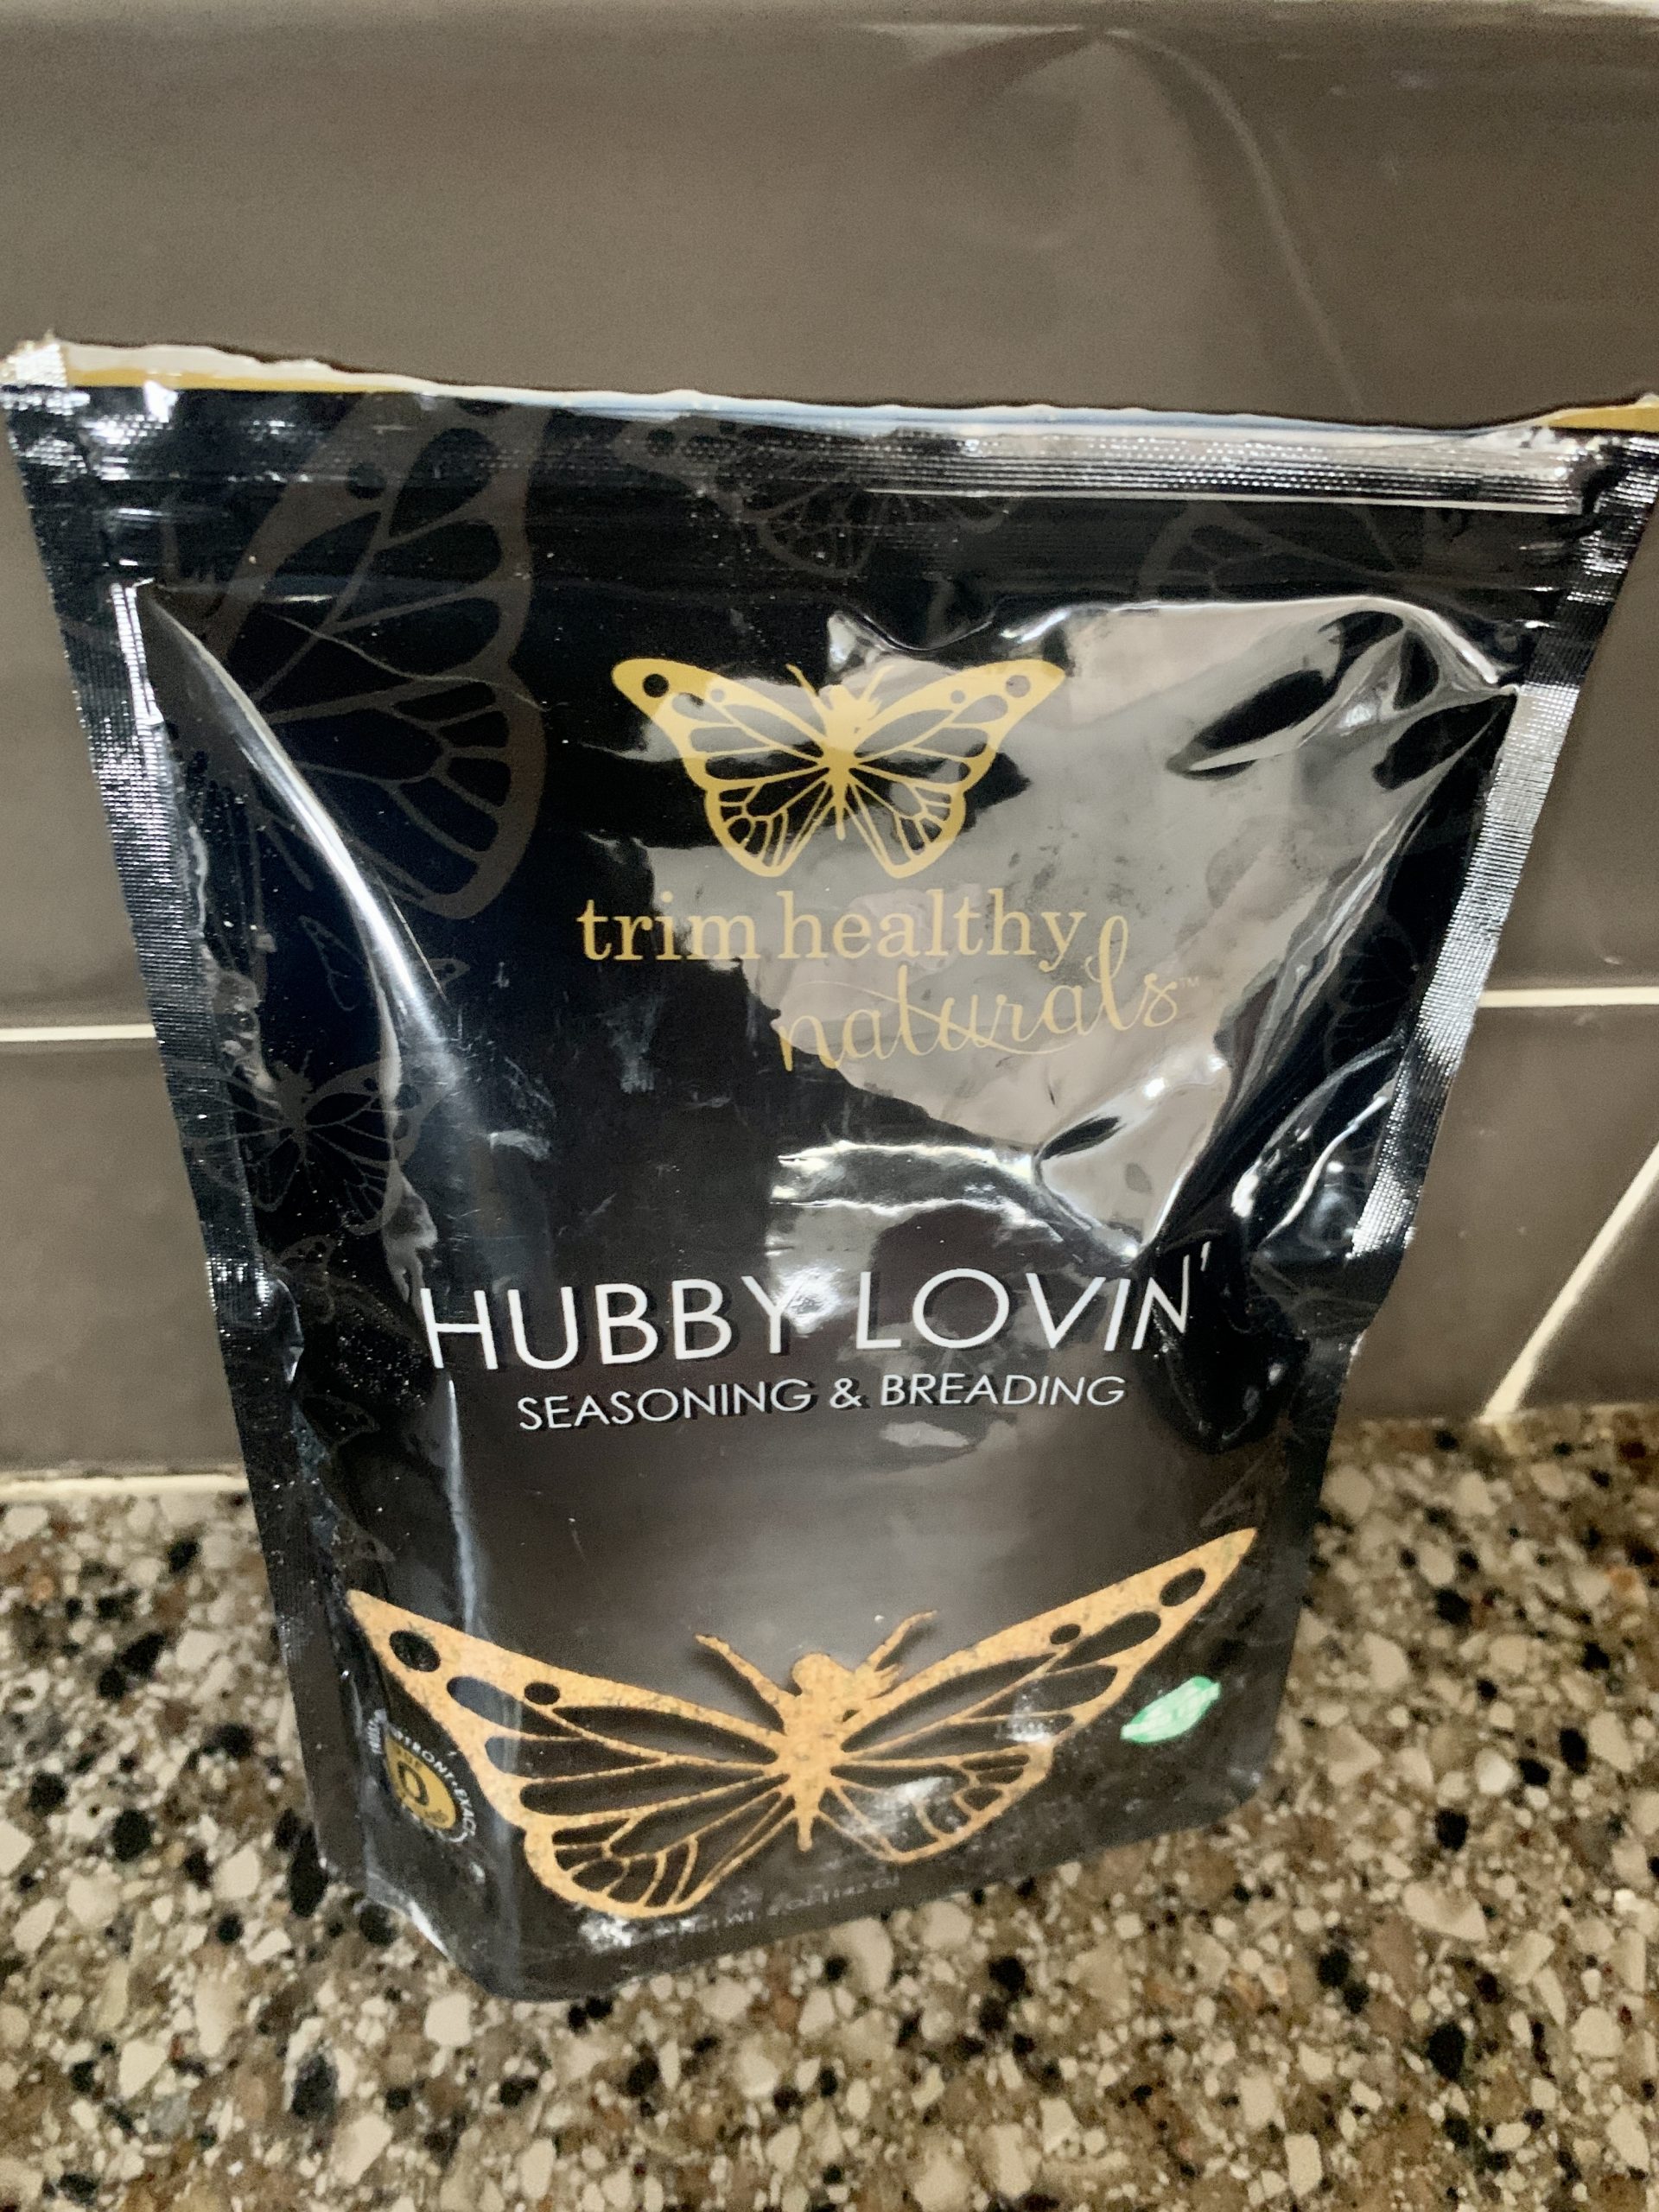 Hubby Lovin’ Seasoning